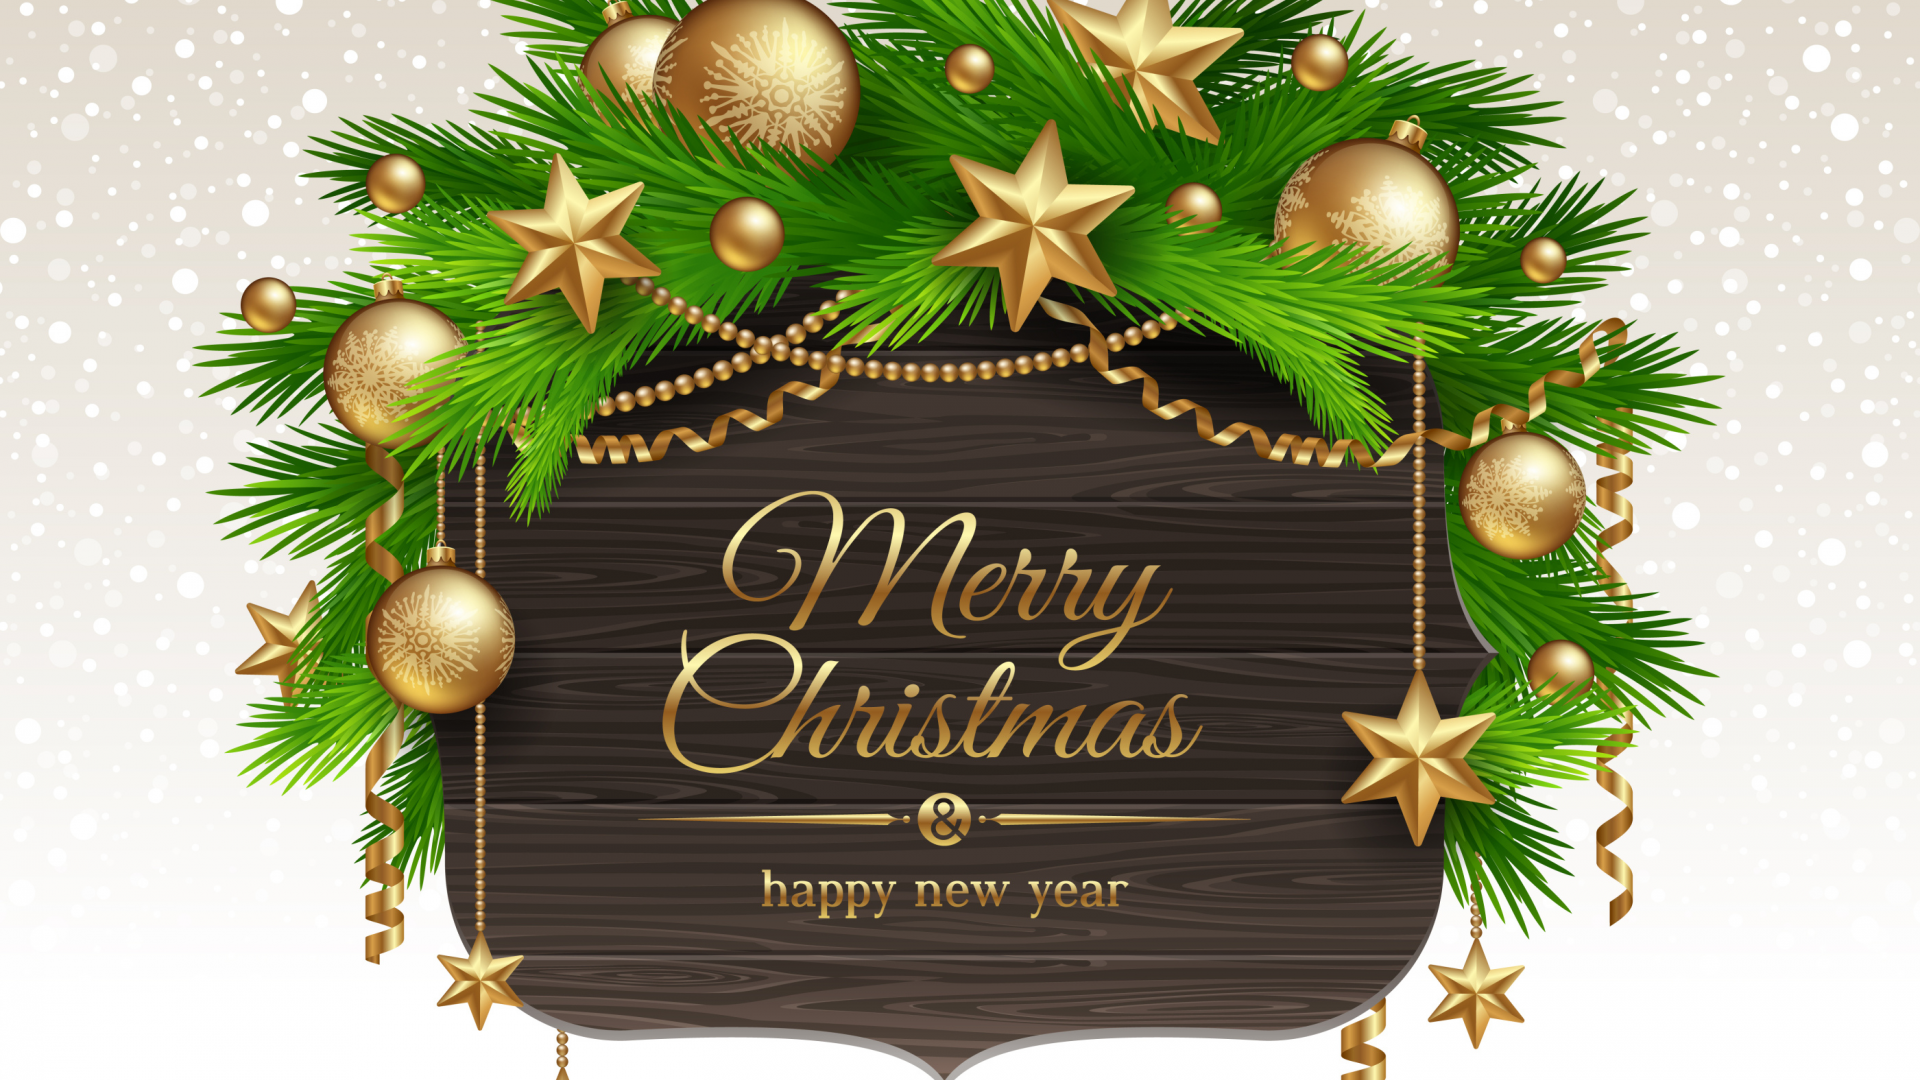 праздник, шары, merry christmas, happy new year, decoration, balls, holiday, stars